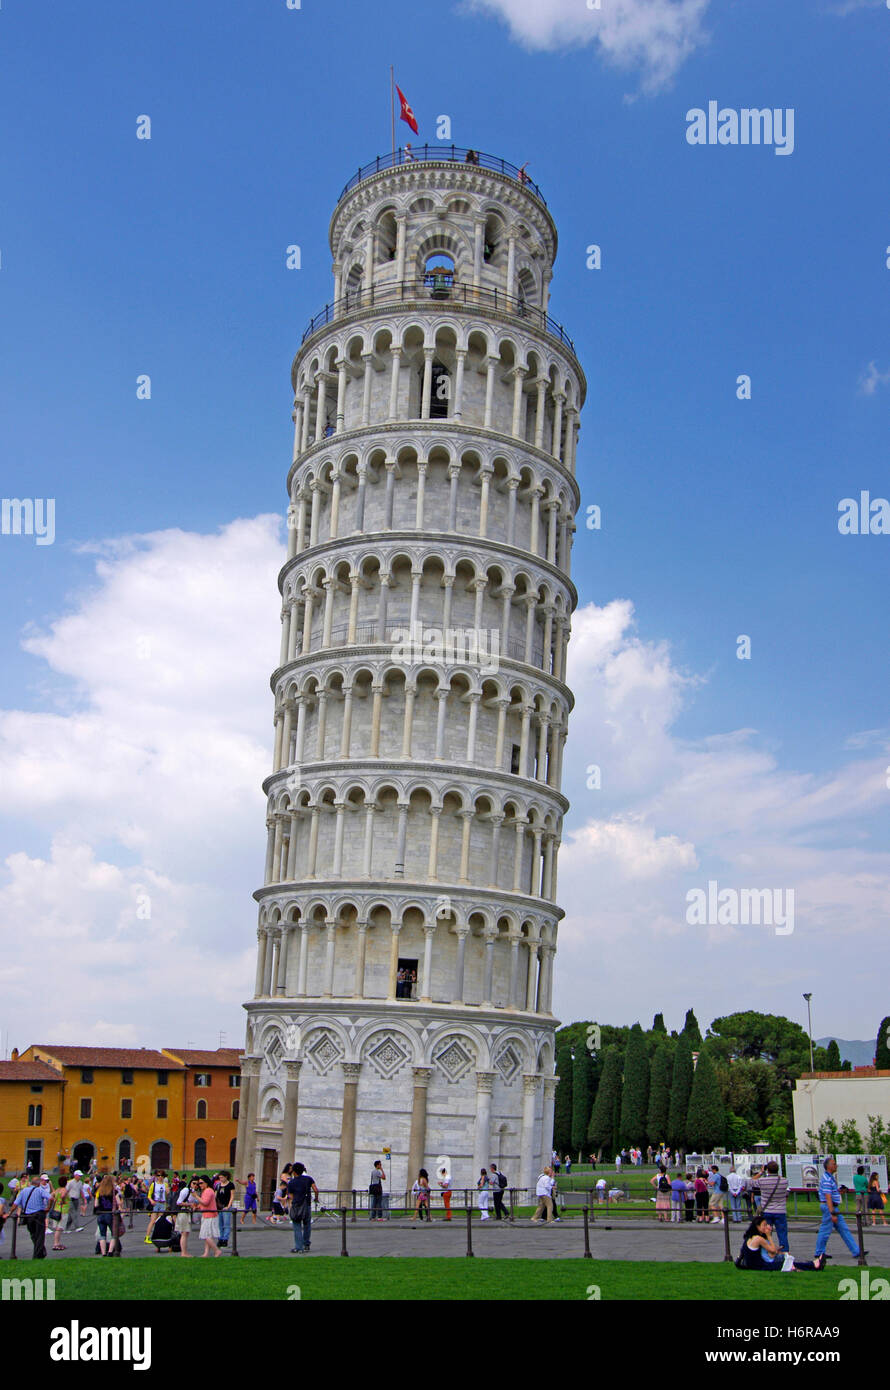 torre pendente de pisa - leaning tower of pisa Stock Photo